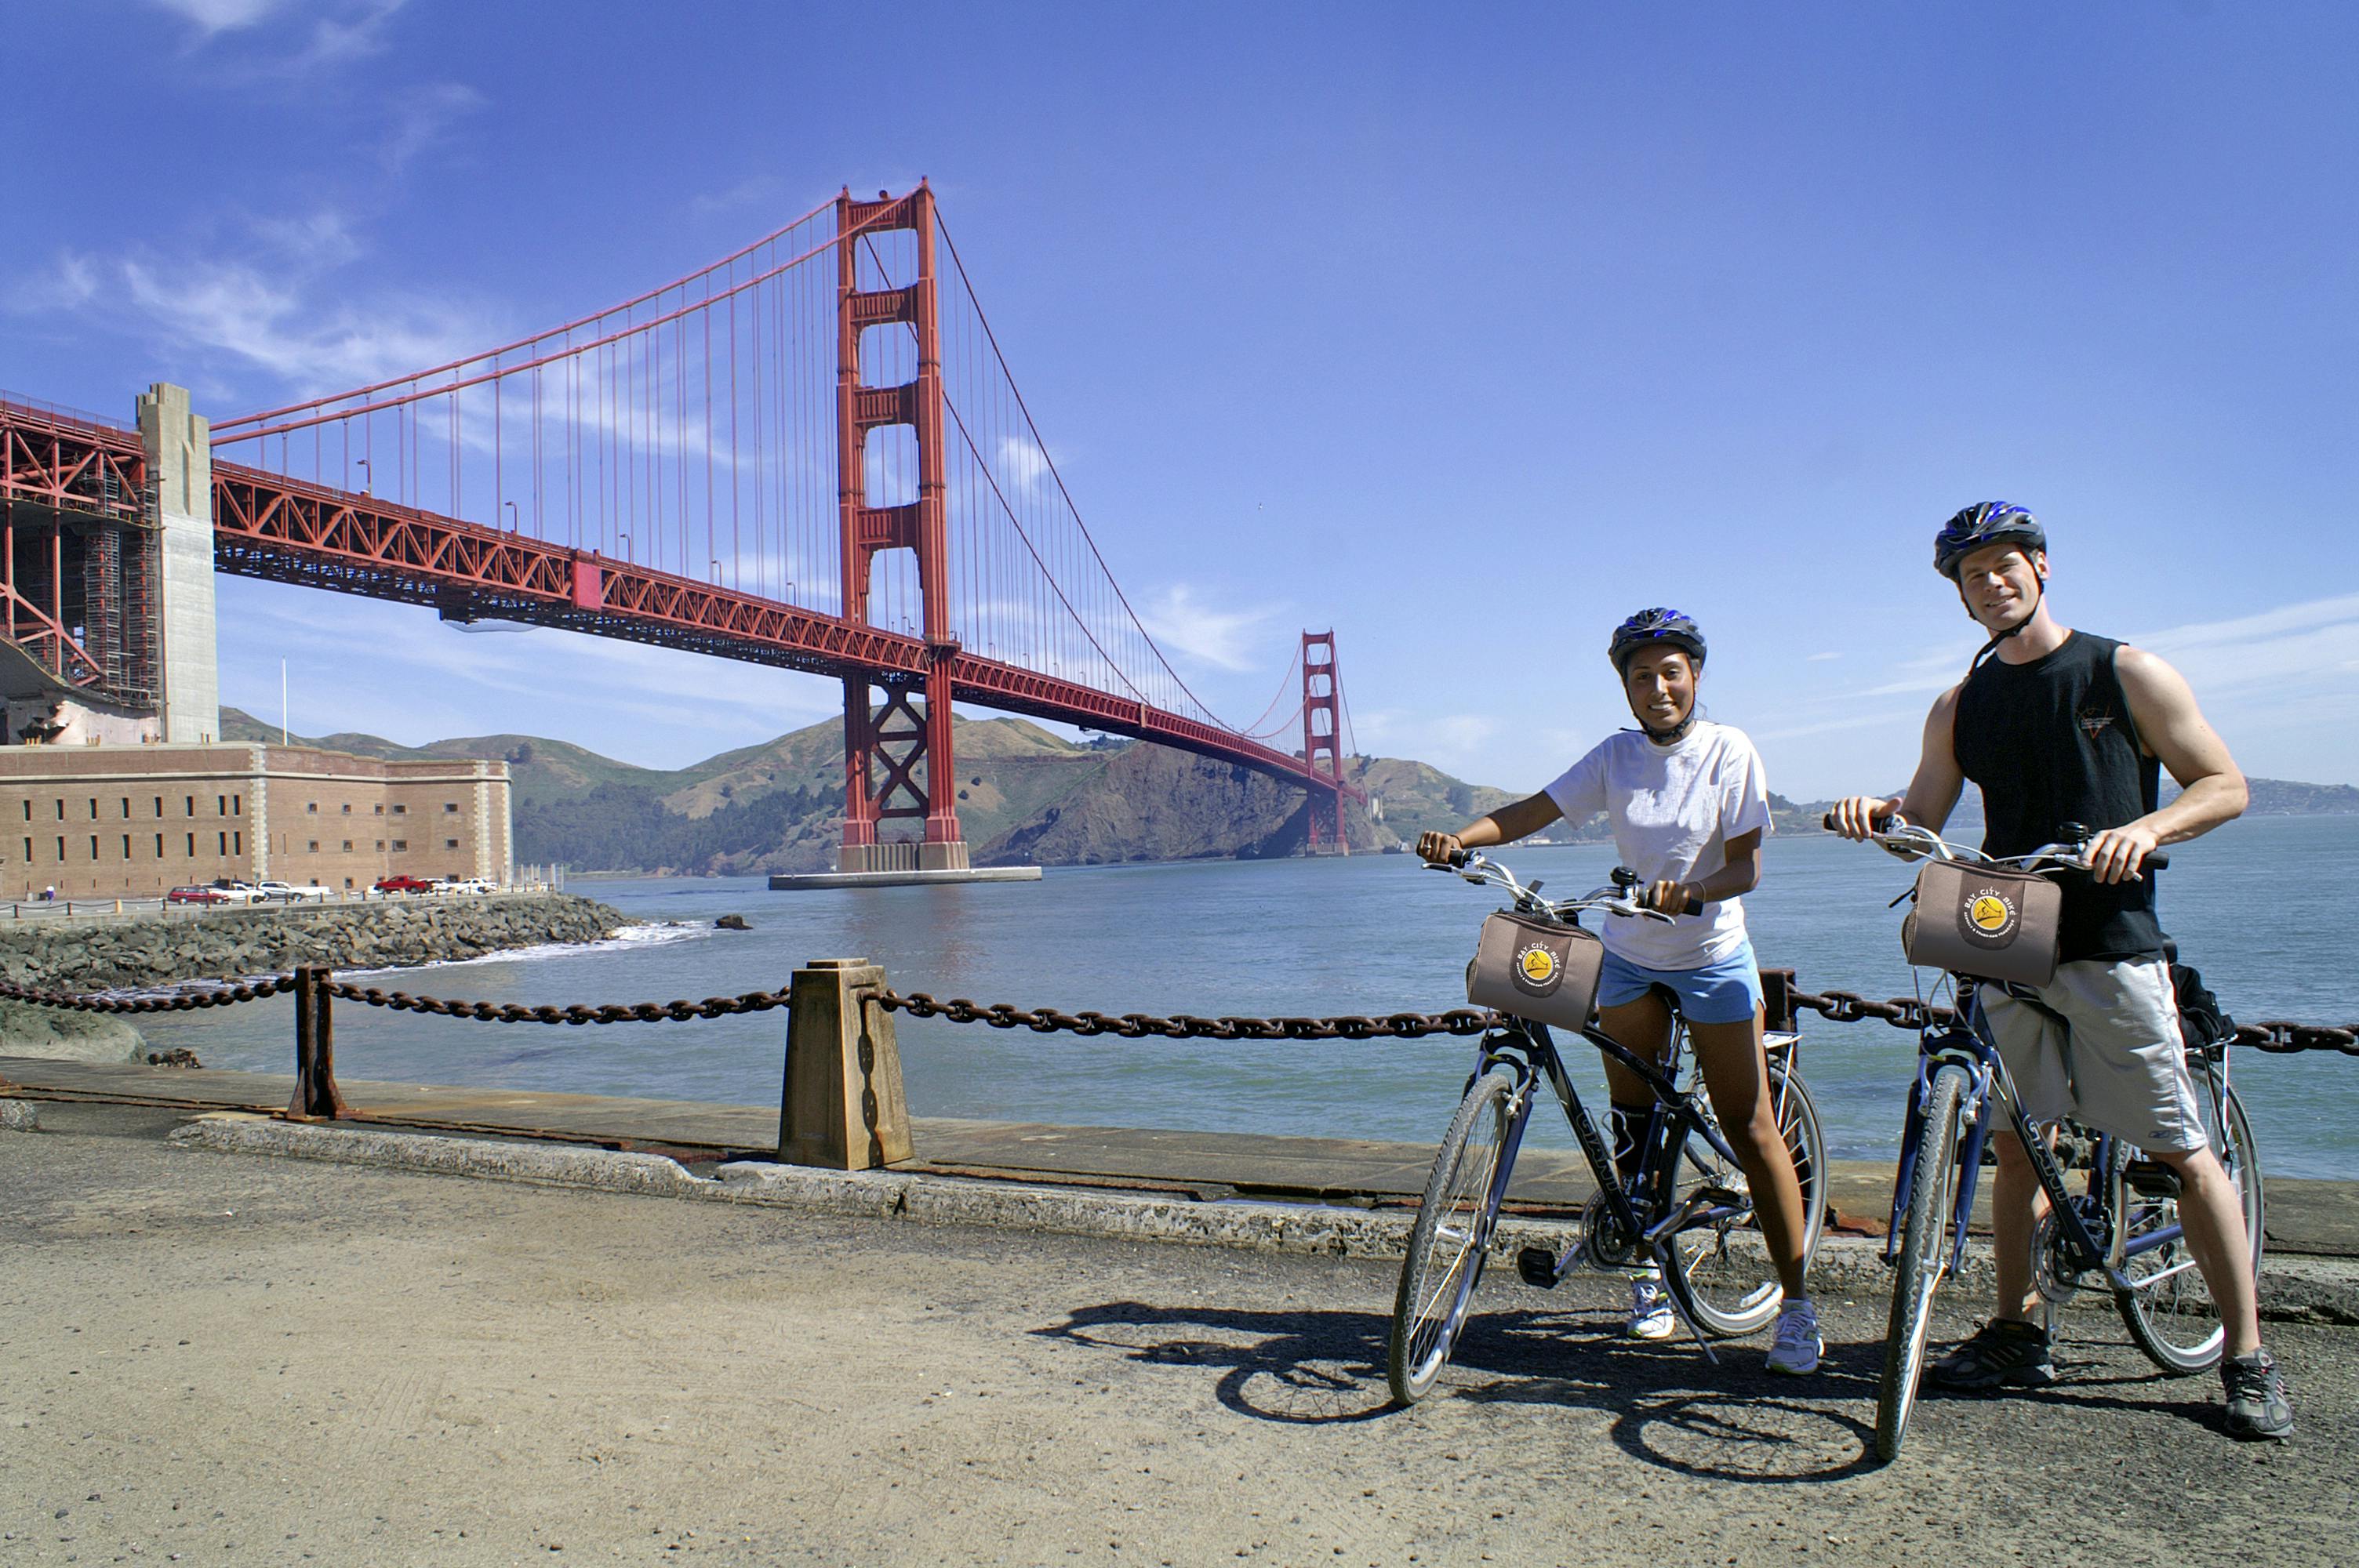 Autobus hop-on hop-off di San Francisco e noleggio biciclette